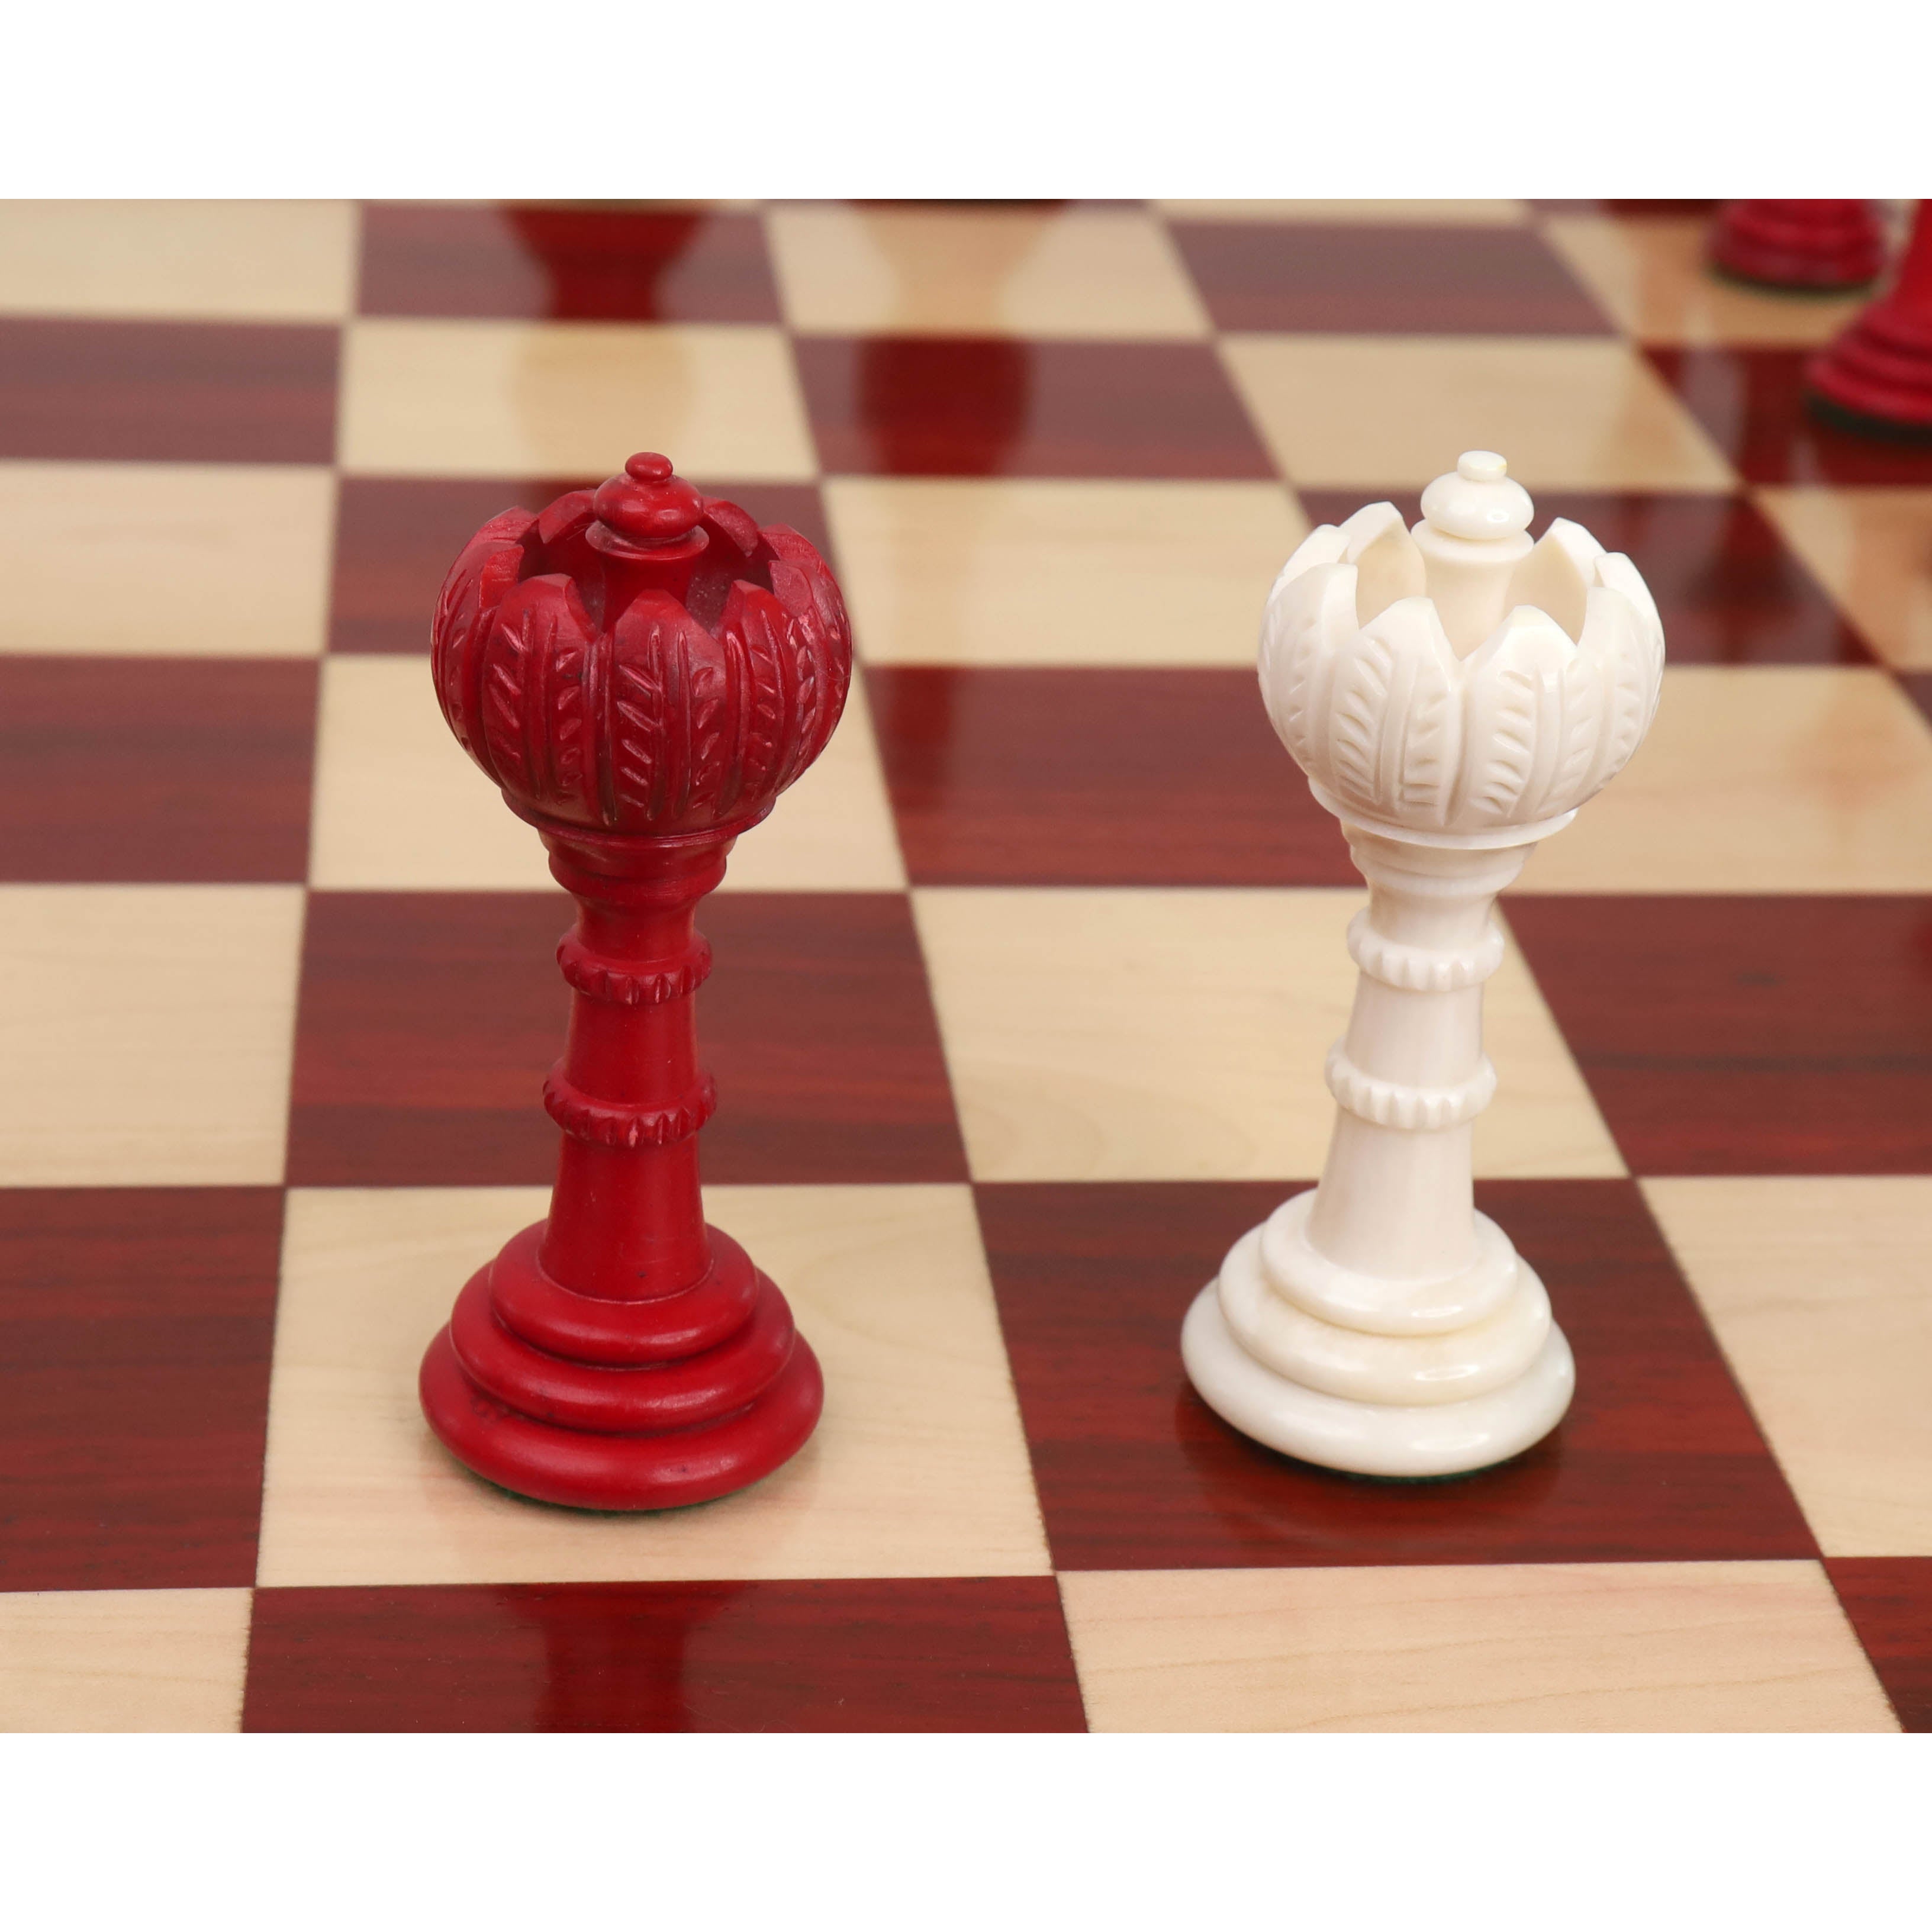 4.6″ Turkish Tower Pre-Staunton Chess Pieces Only set-Crimson & White Camel Bone